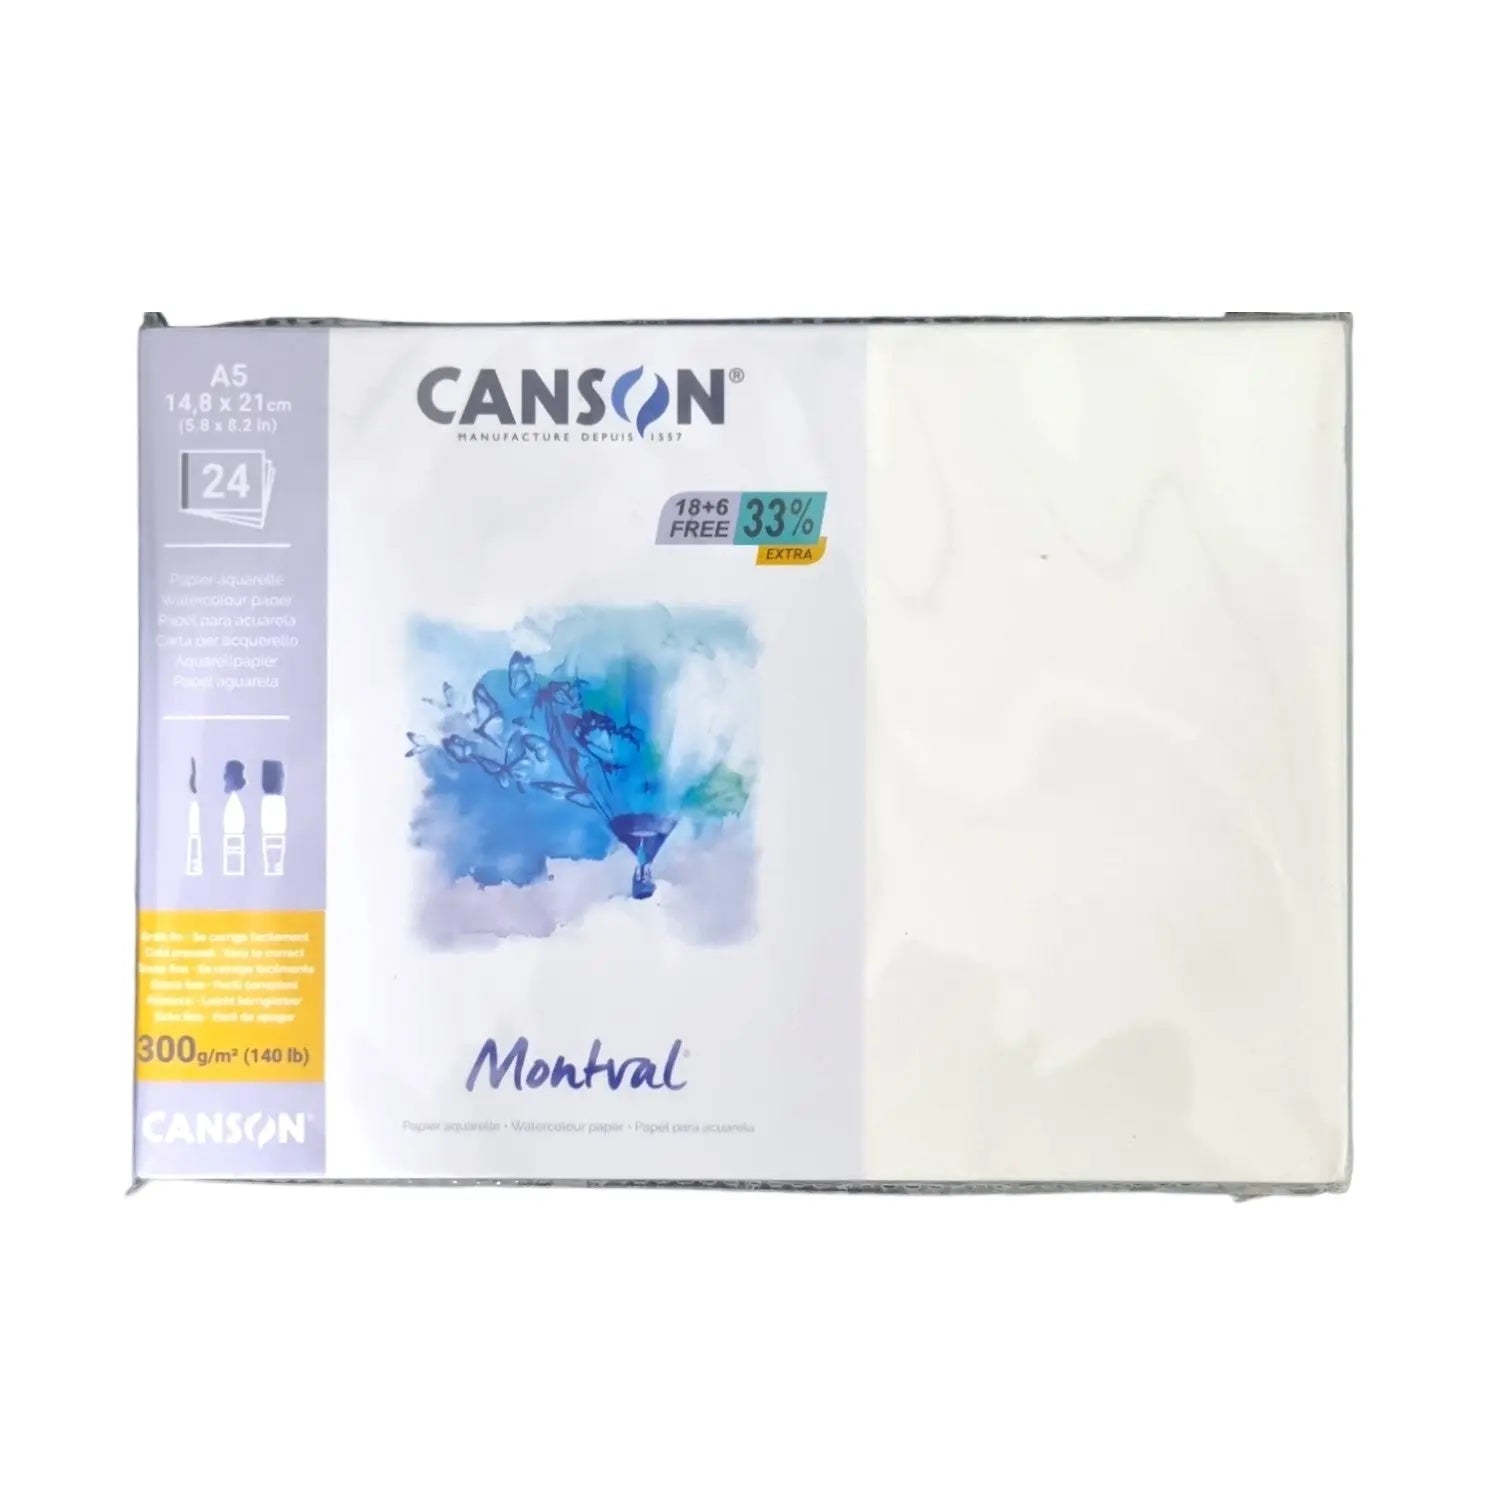 Canson Cotton Watercolor Paper, 300gsm Watercolor Sketchbook